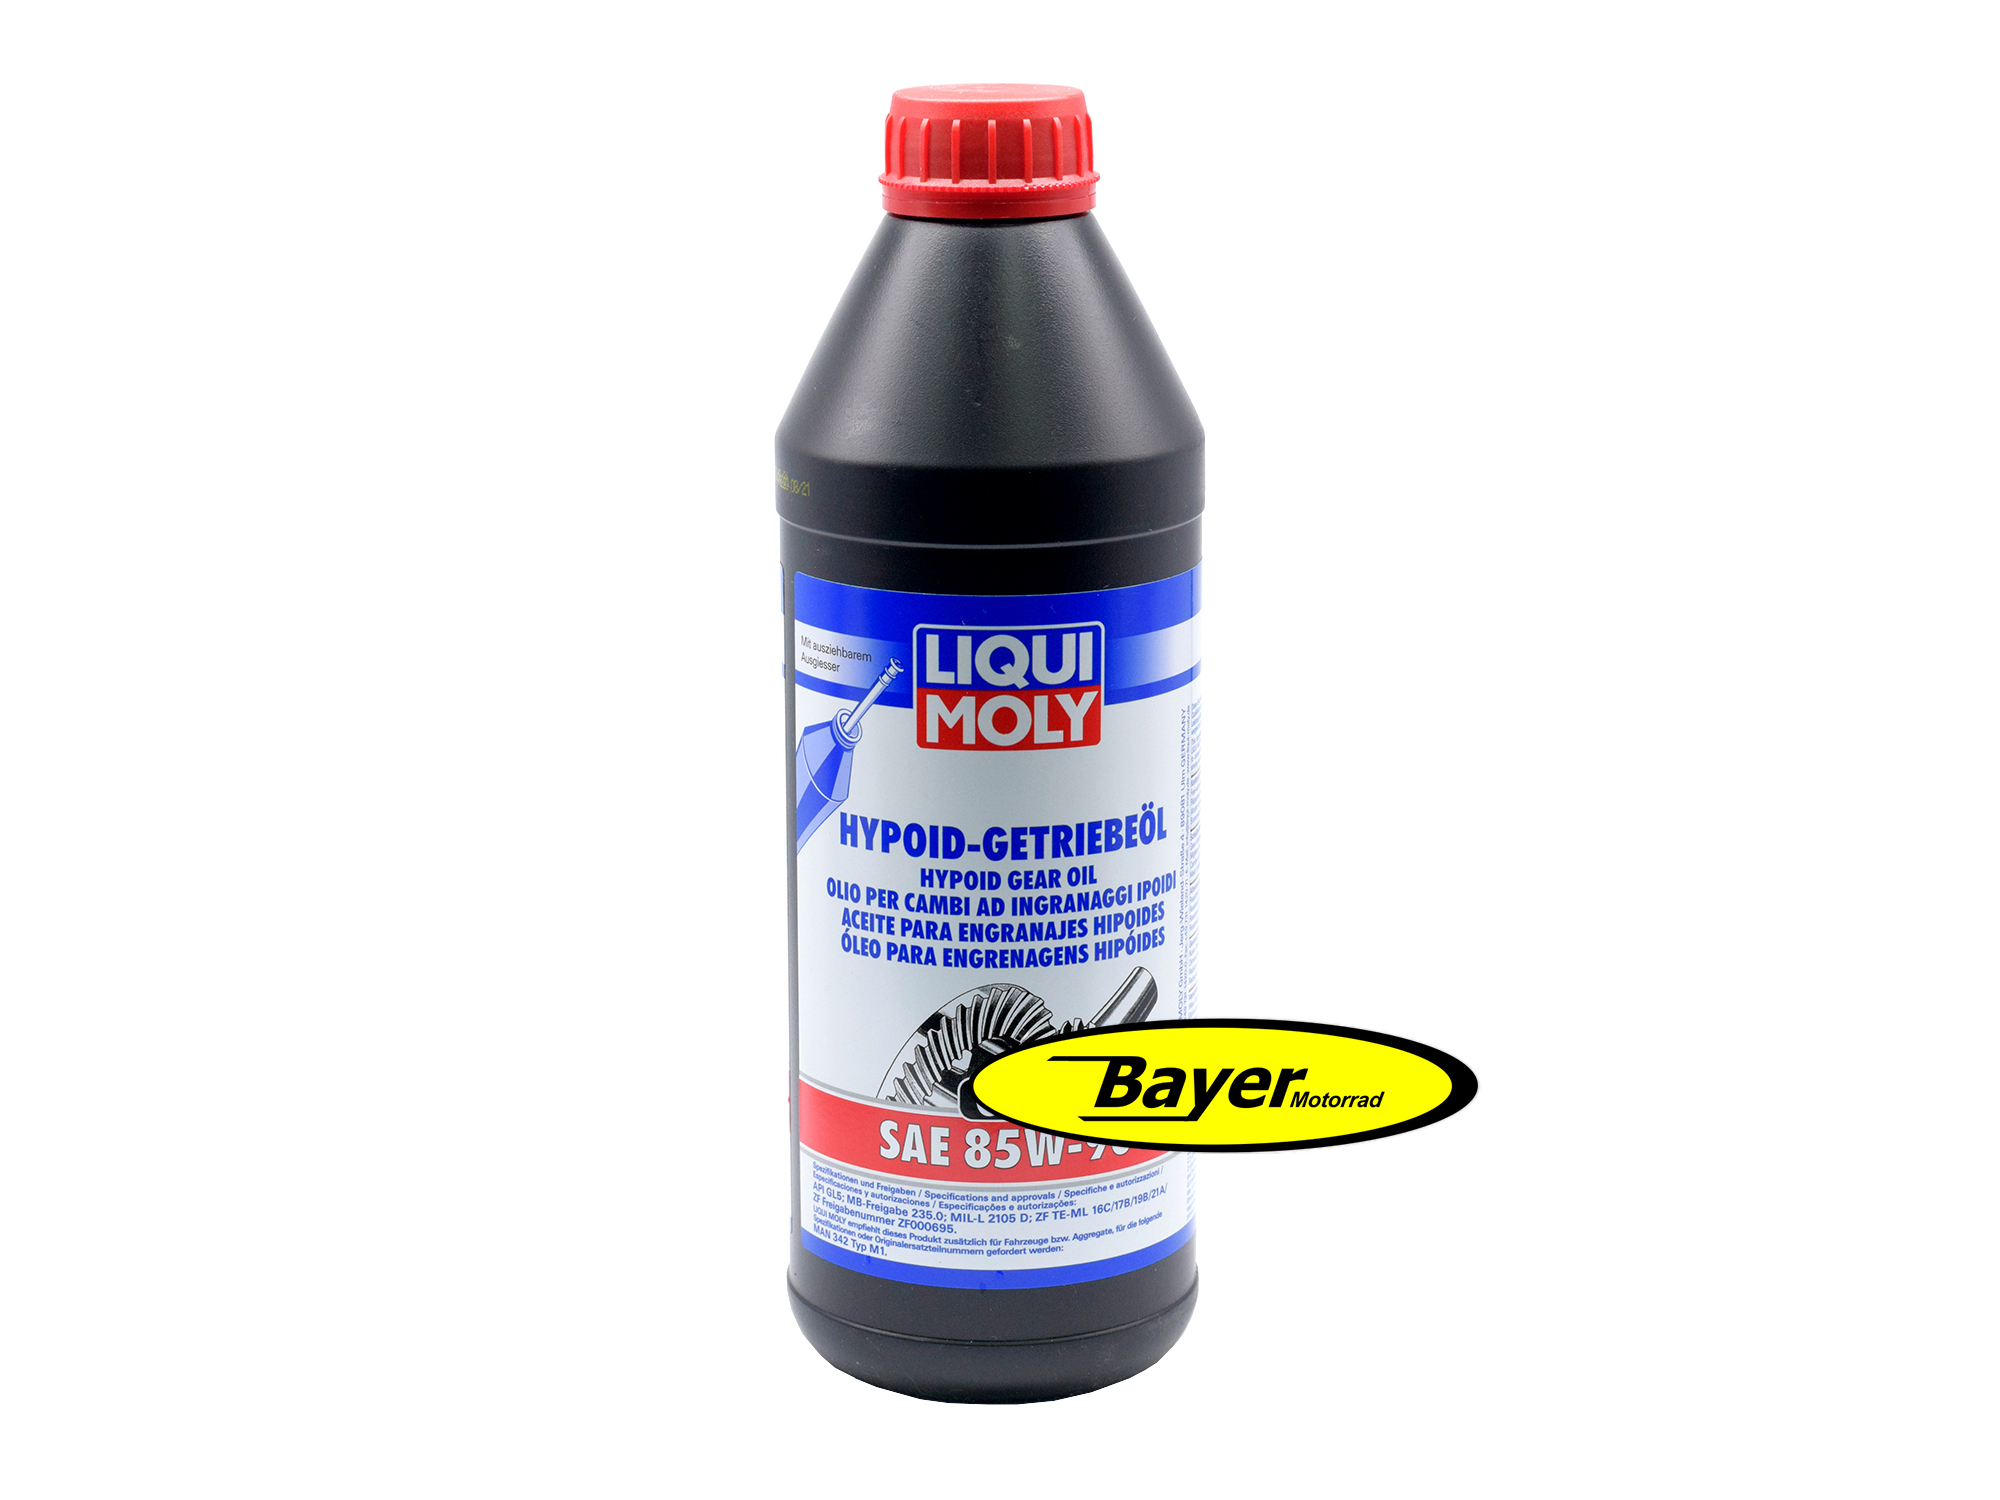 Hypoid-Getriebeöl Öl